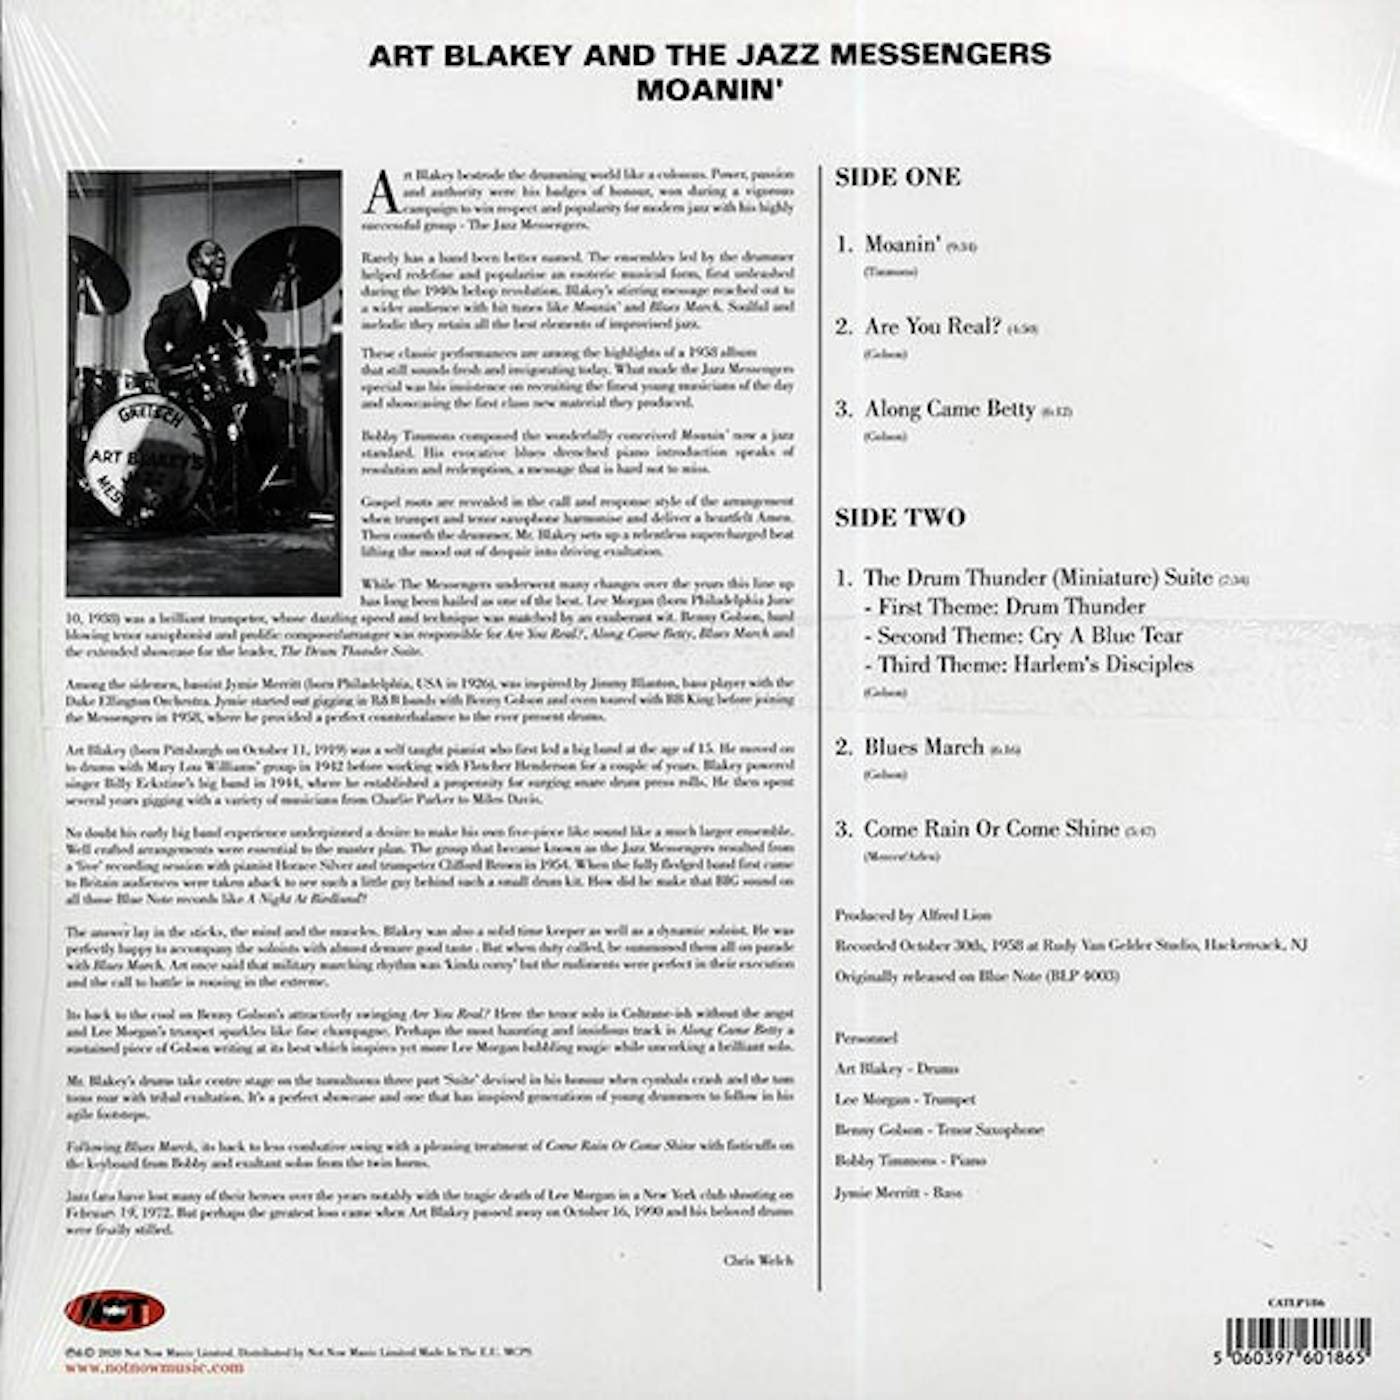 Art Blakey & The Jazz Messengers  LP -  Moanin' (180g) (Vinyl)